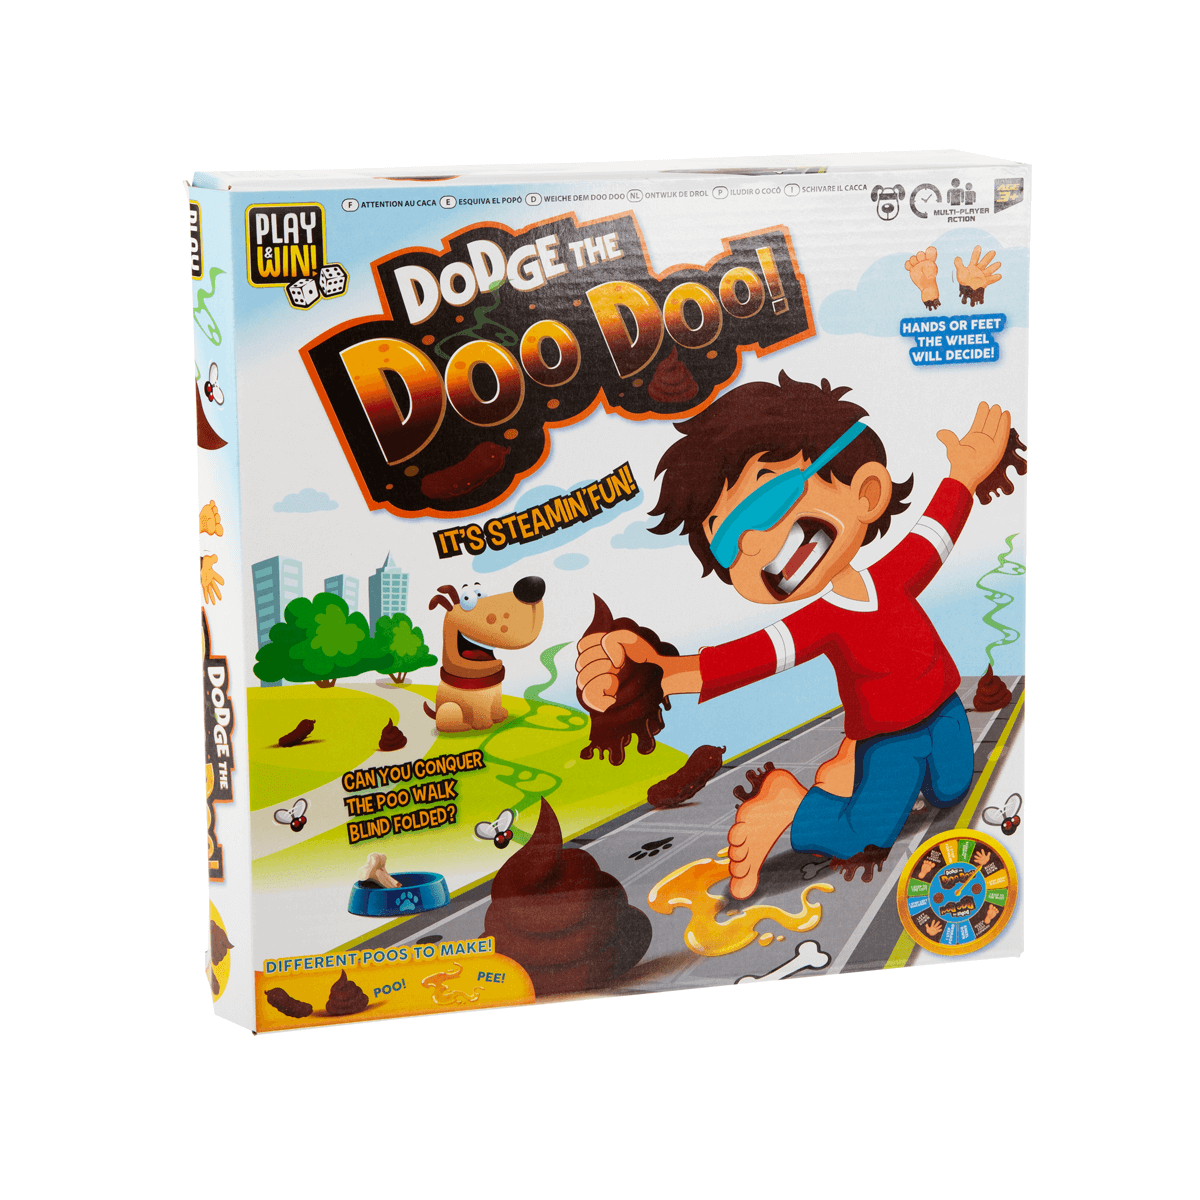 The Doo Doo Game